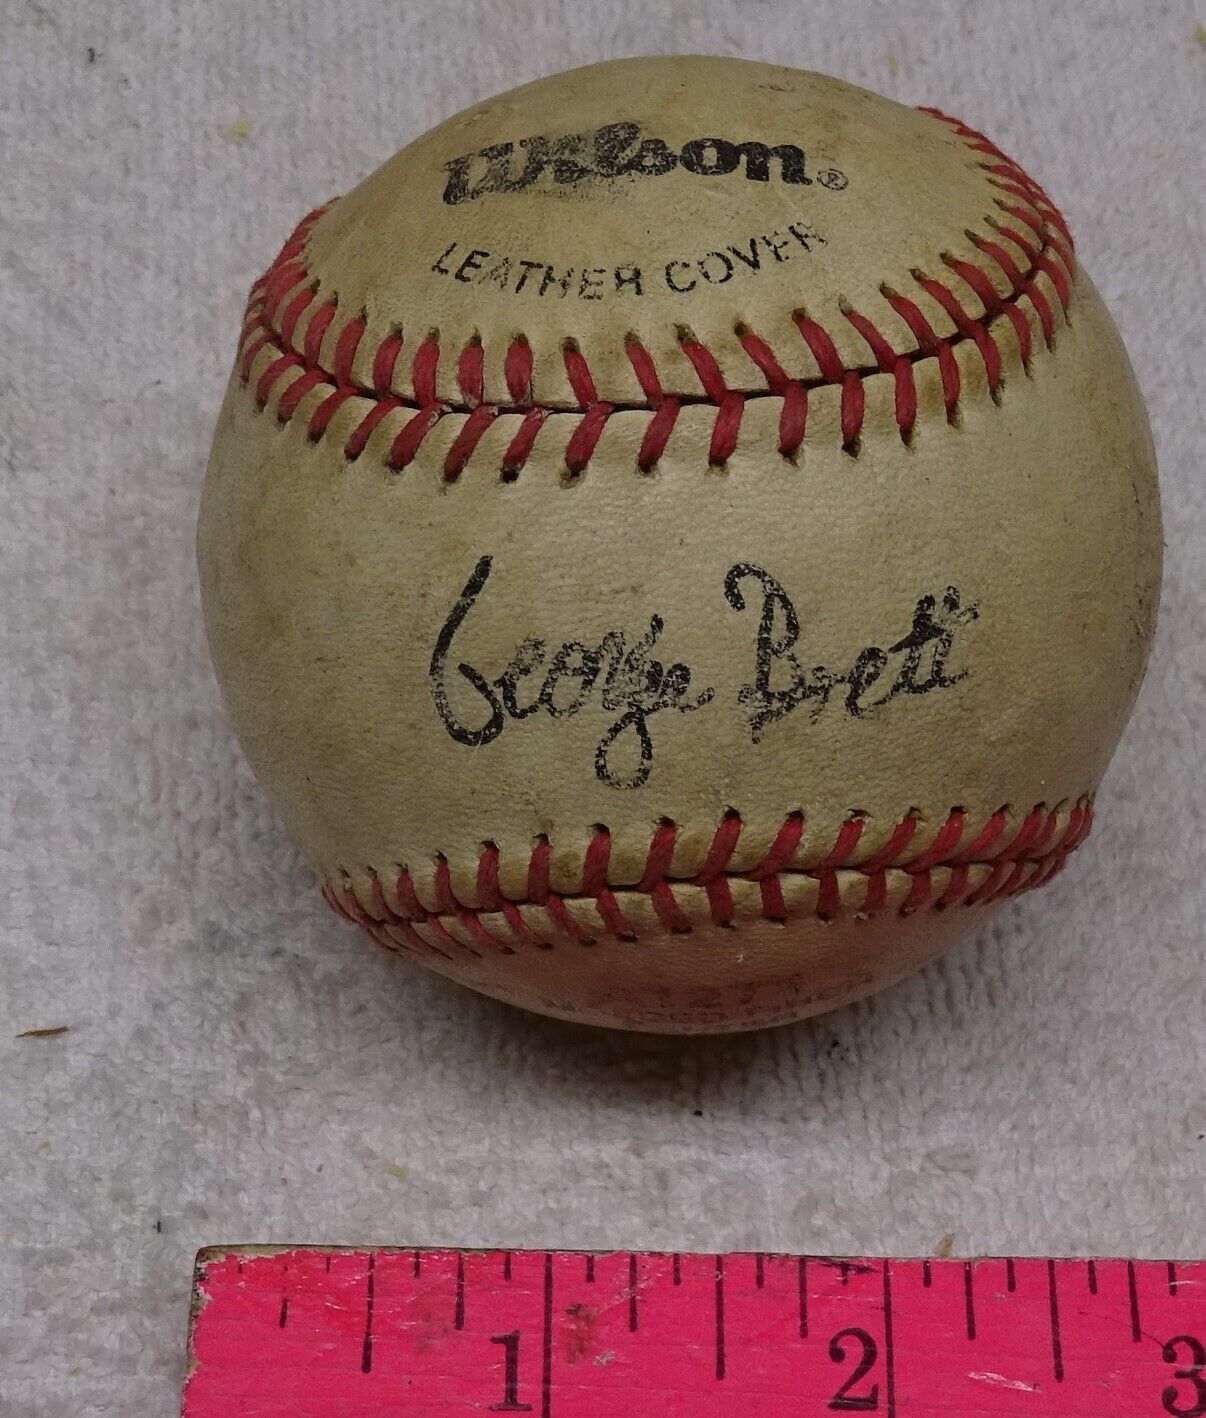 ** Vintage - WILSON BASEBALL - w GEORGE BRETT Name on it -- USED but SUPER NEAT